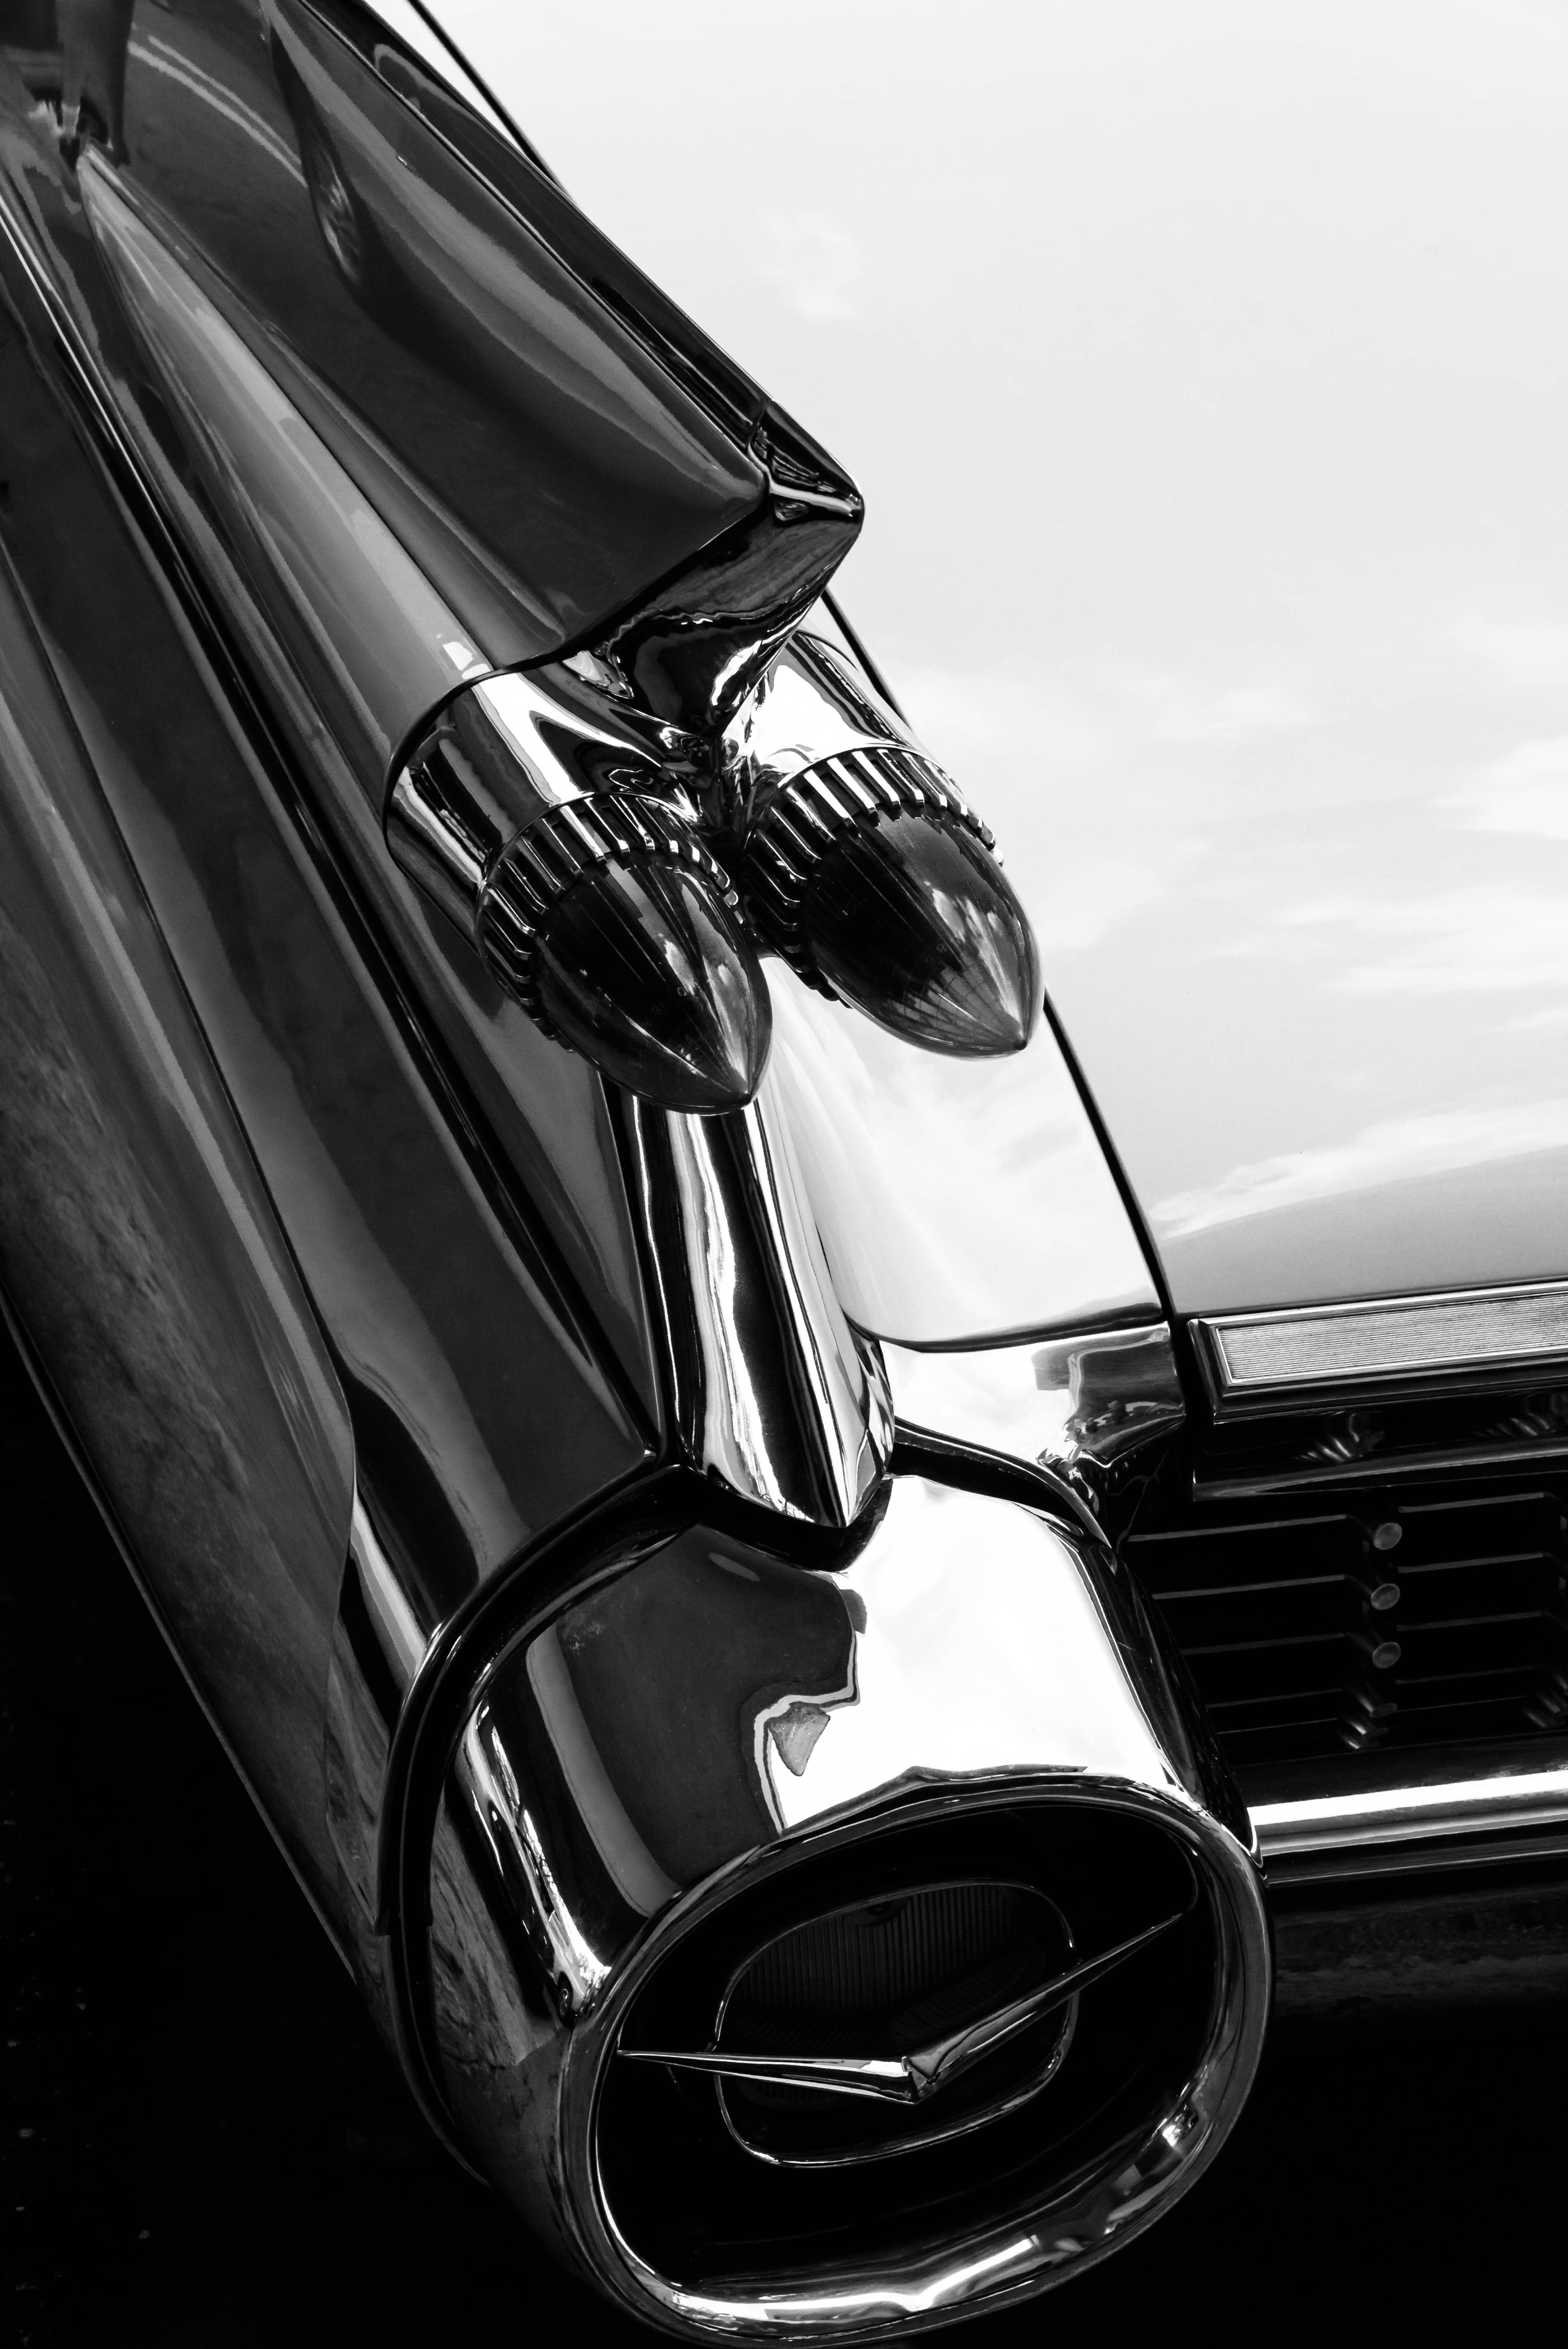 1959 Cadillac Eldorado, 2015, Monochrome, Vehicle, Us, HQ Photo